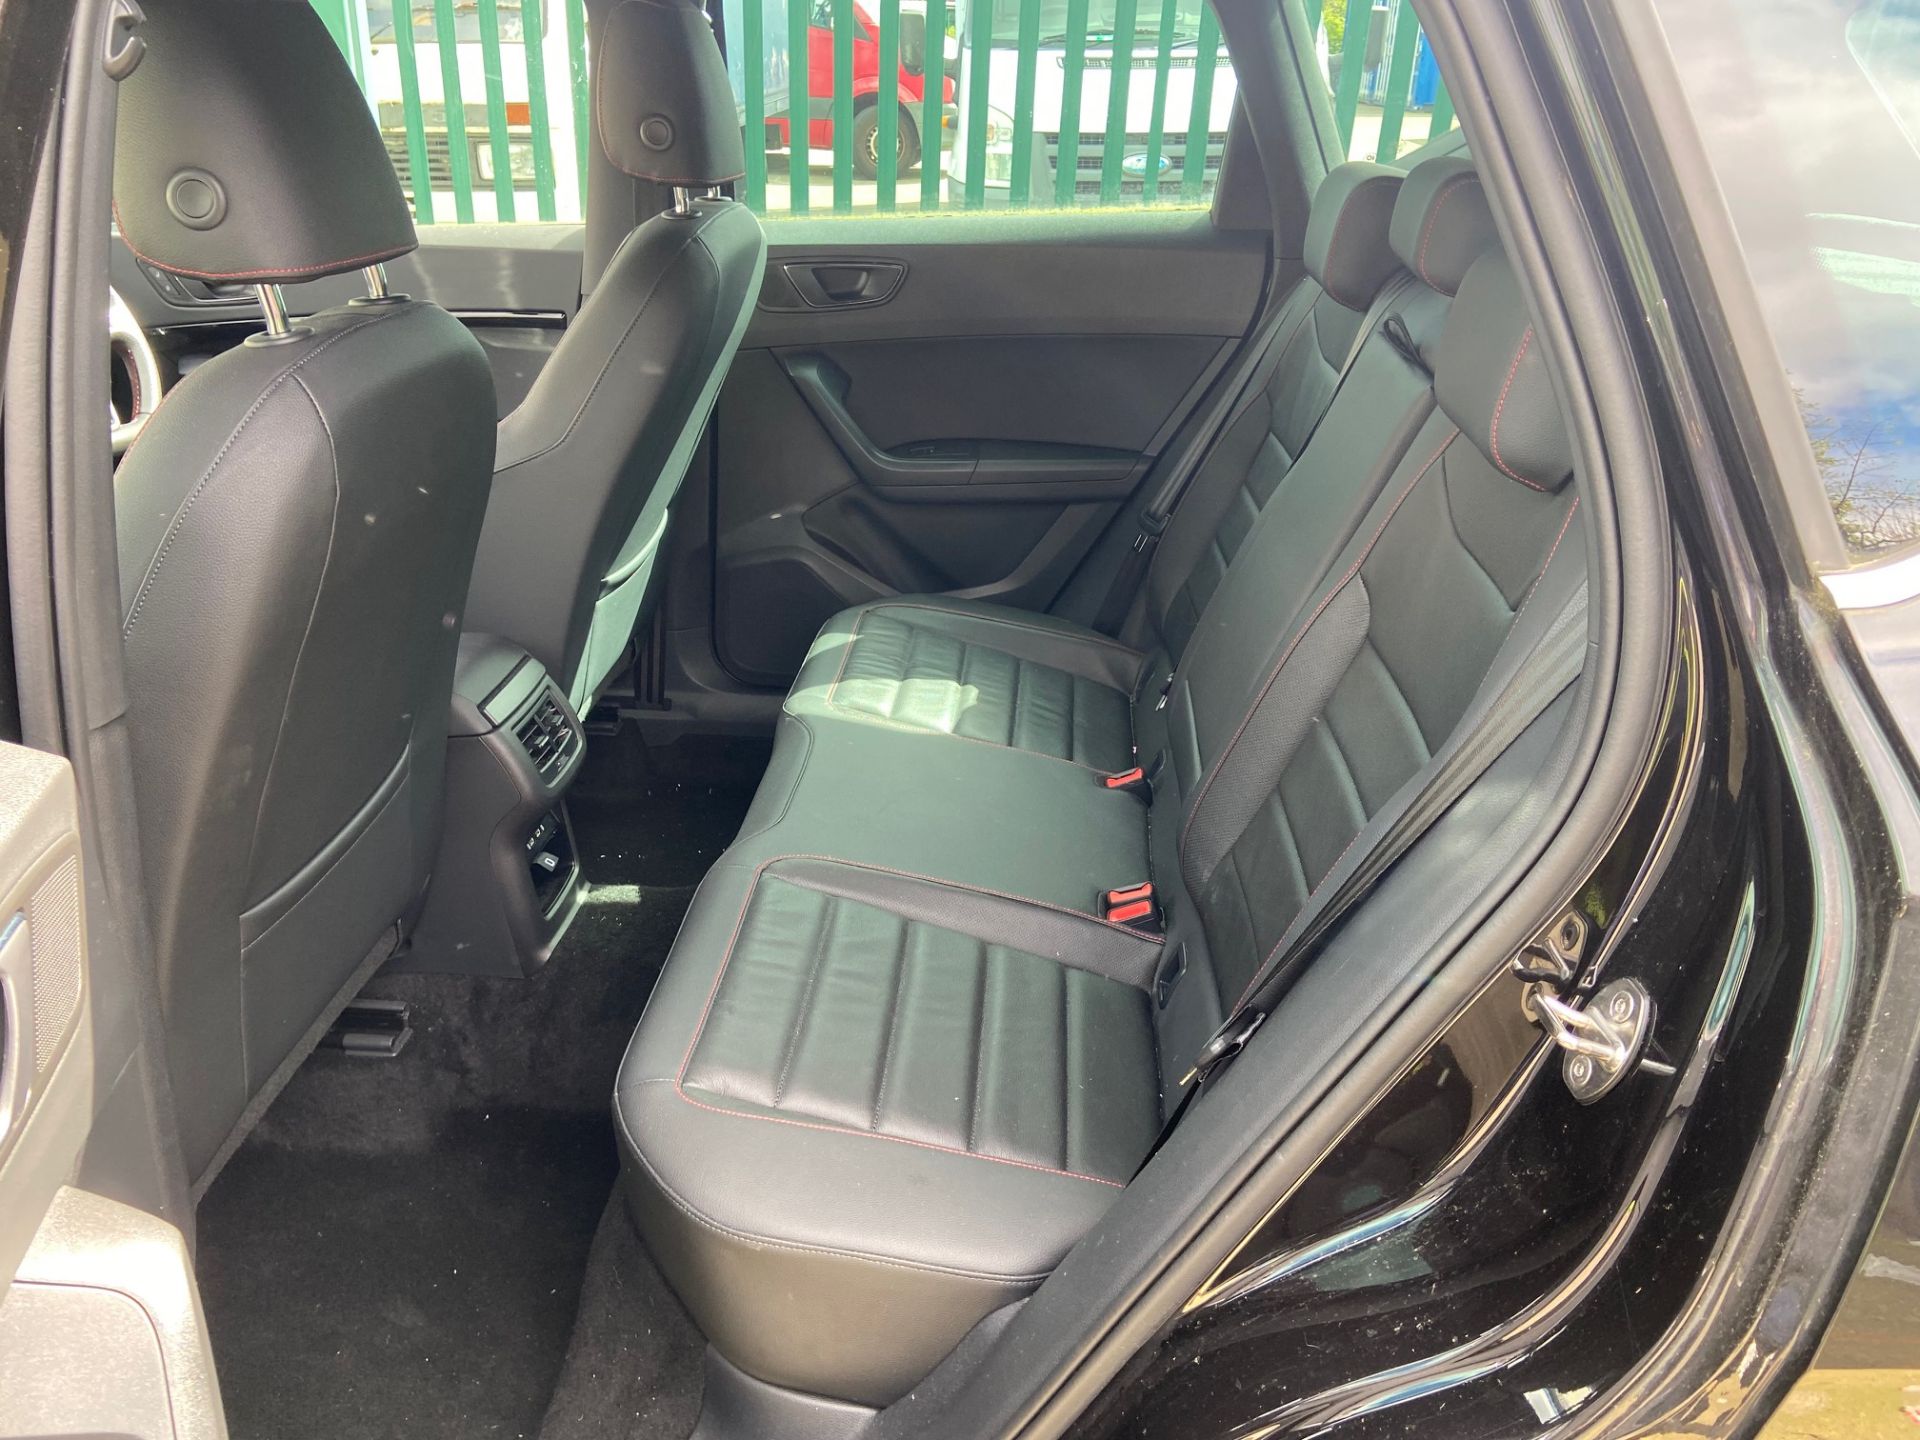 SEAT ATECA (YOM 2019) FR SPORT TSi 4 DRIVE 2.0 five door hatchback - petrol - black. - Bild 11 aus 13